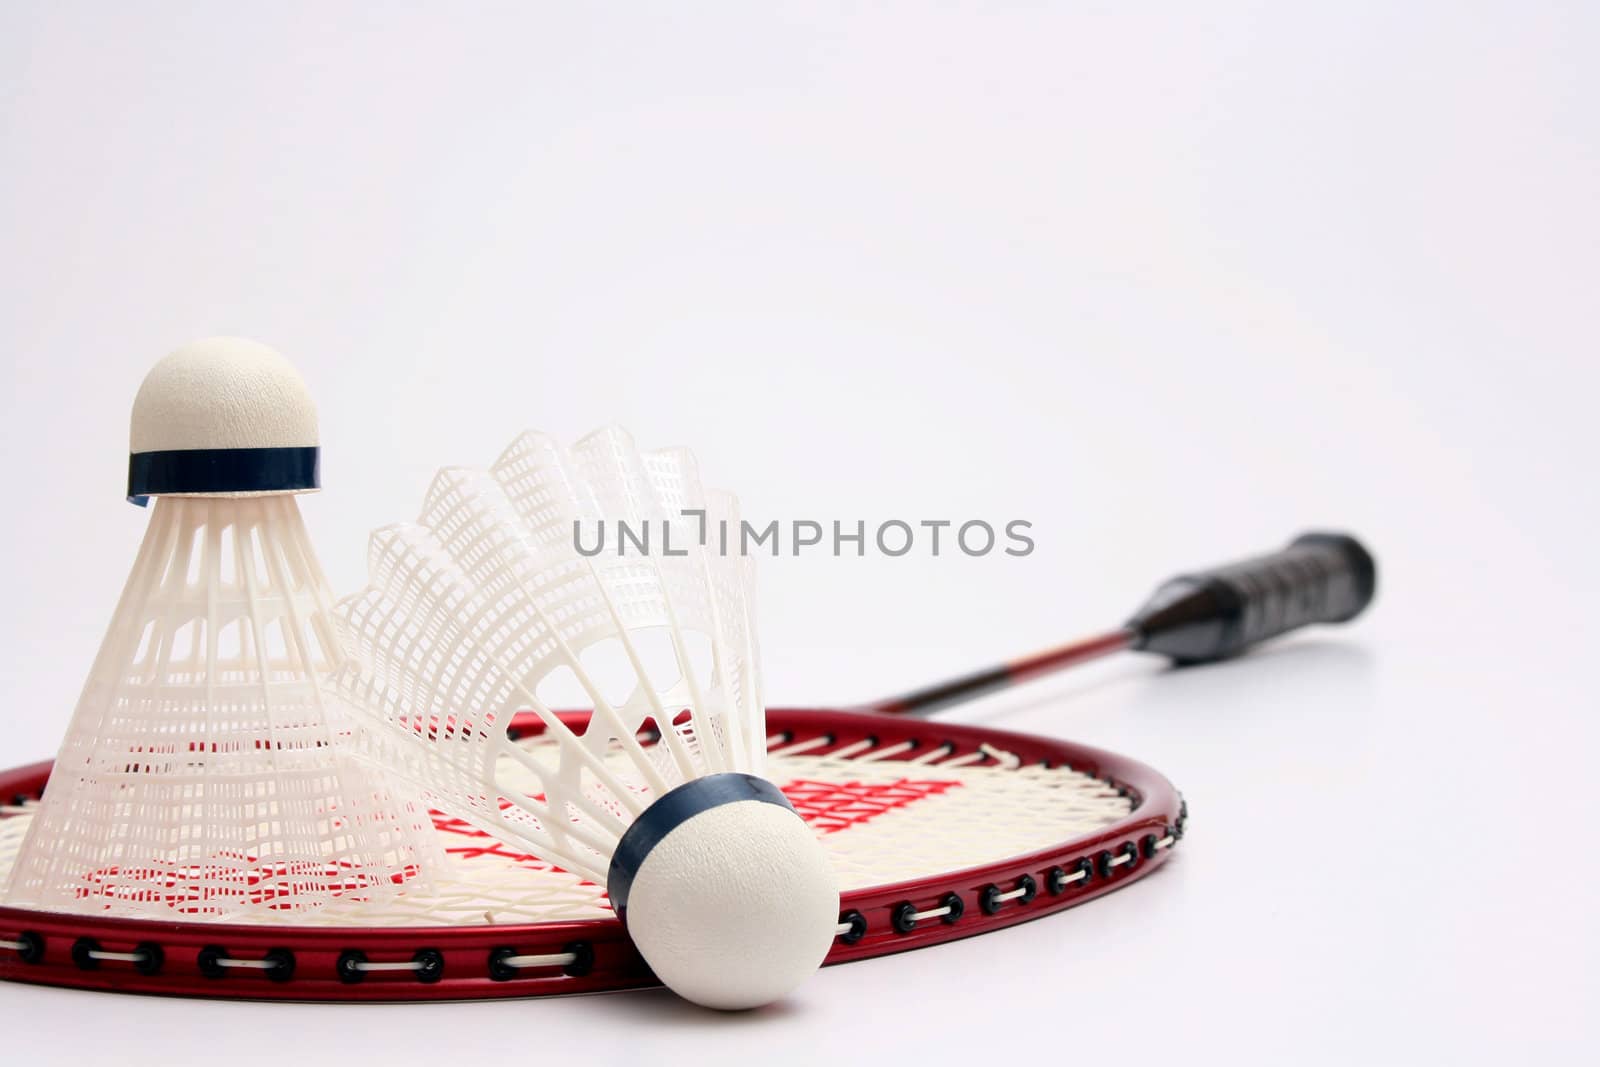 White shuttlecocks for badminton and a racket.